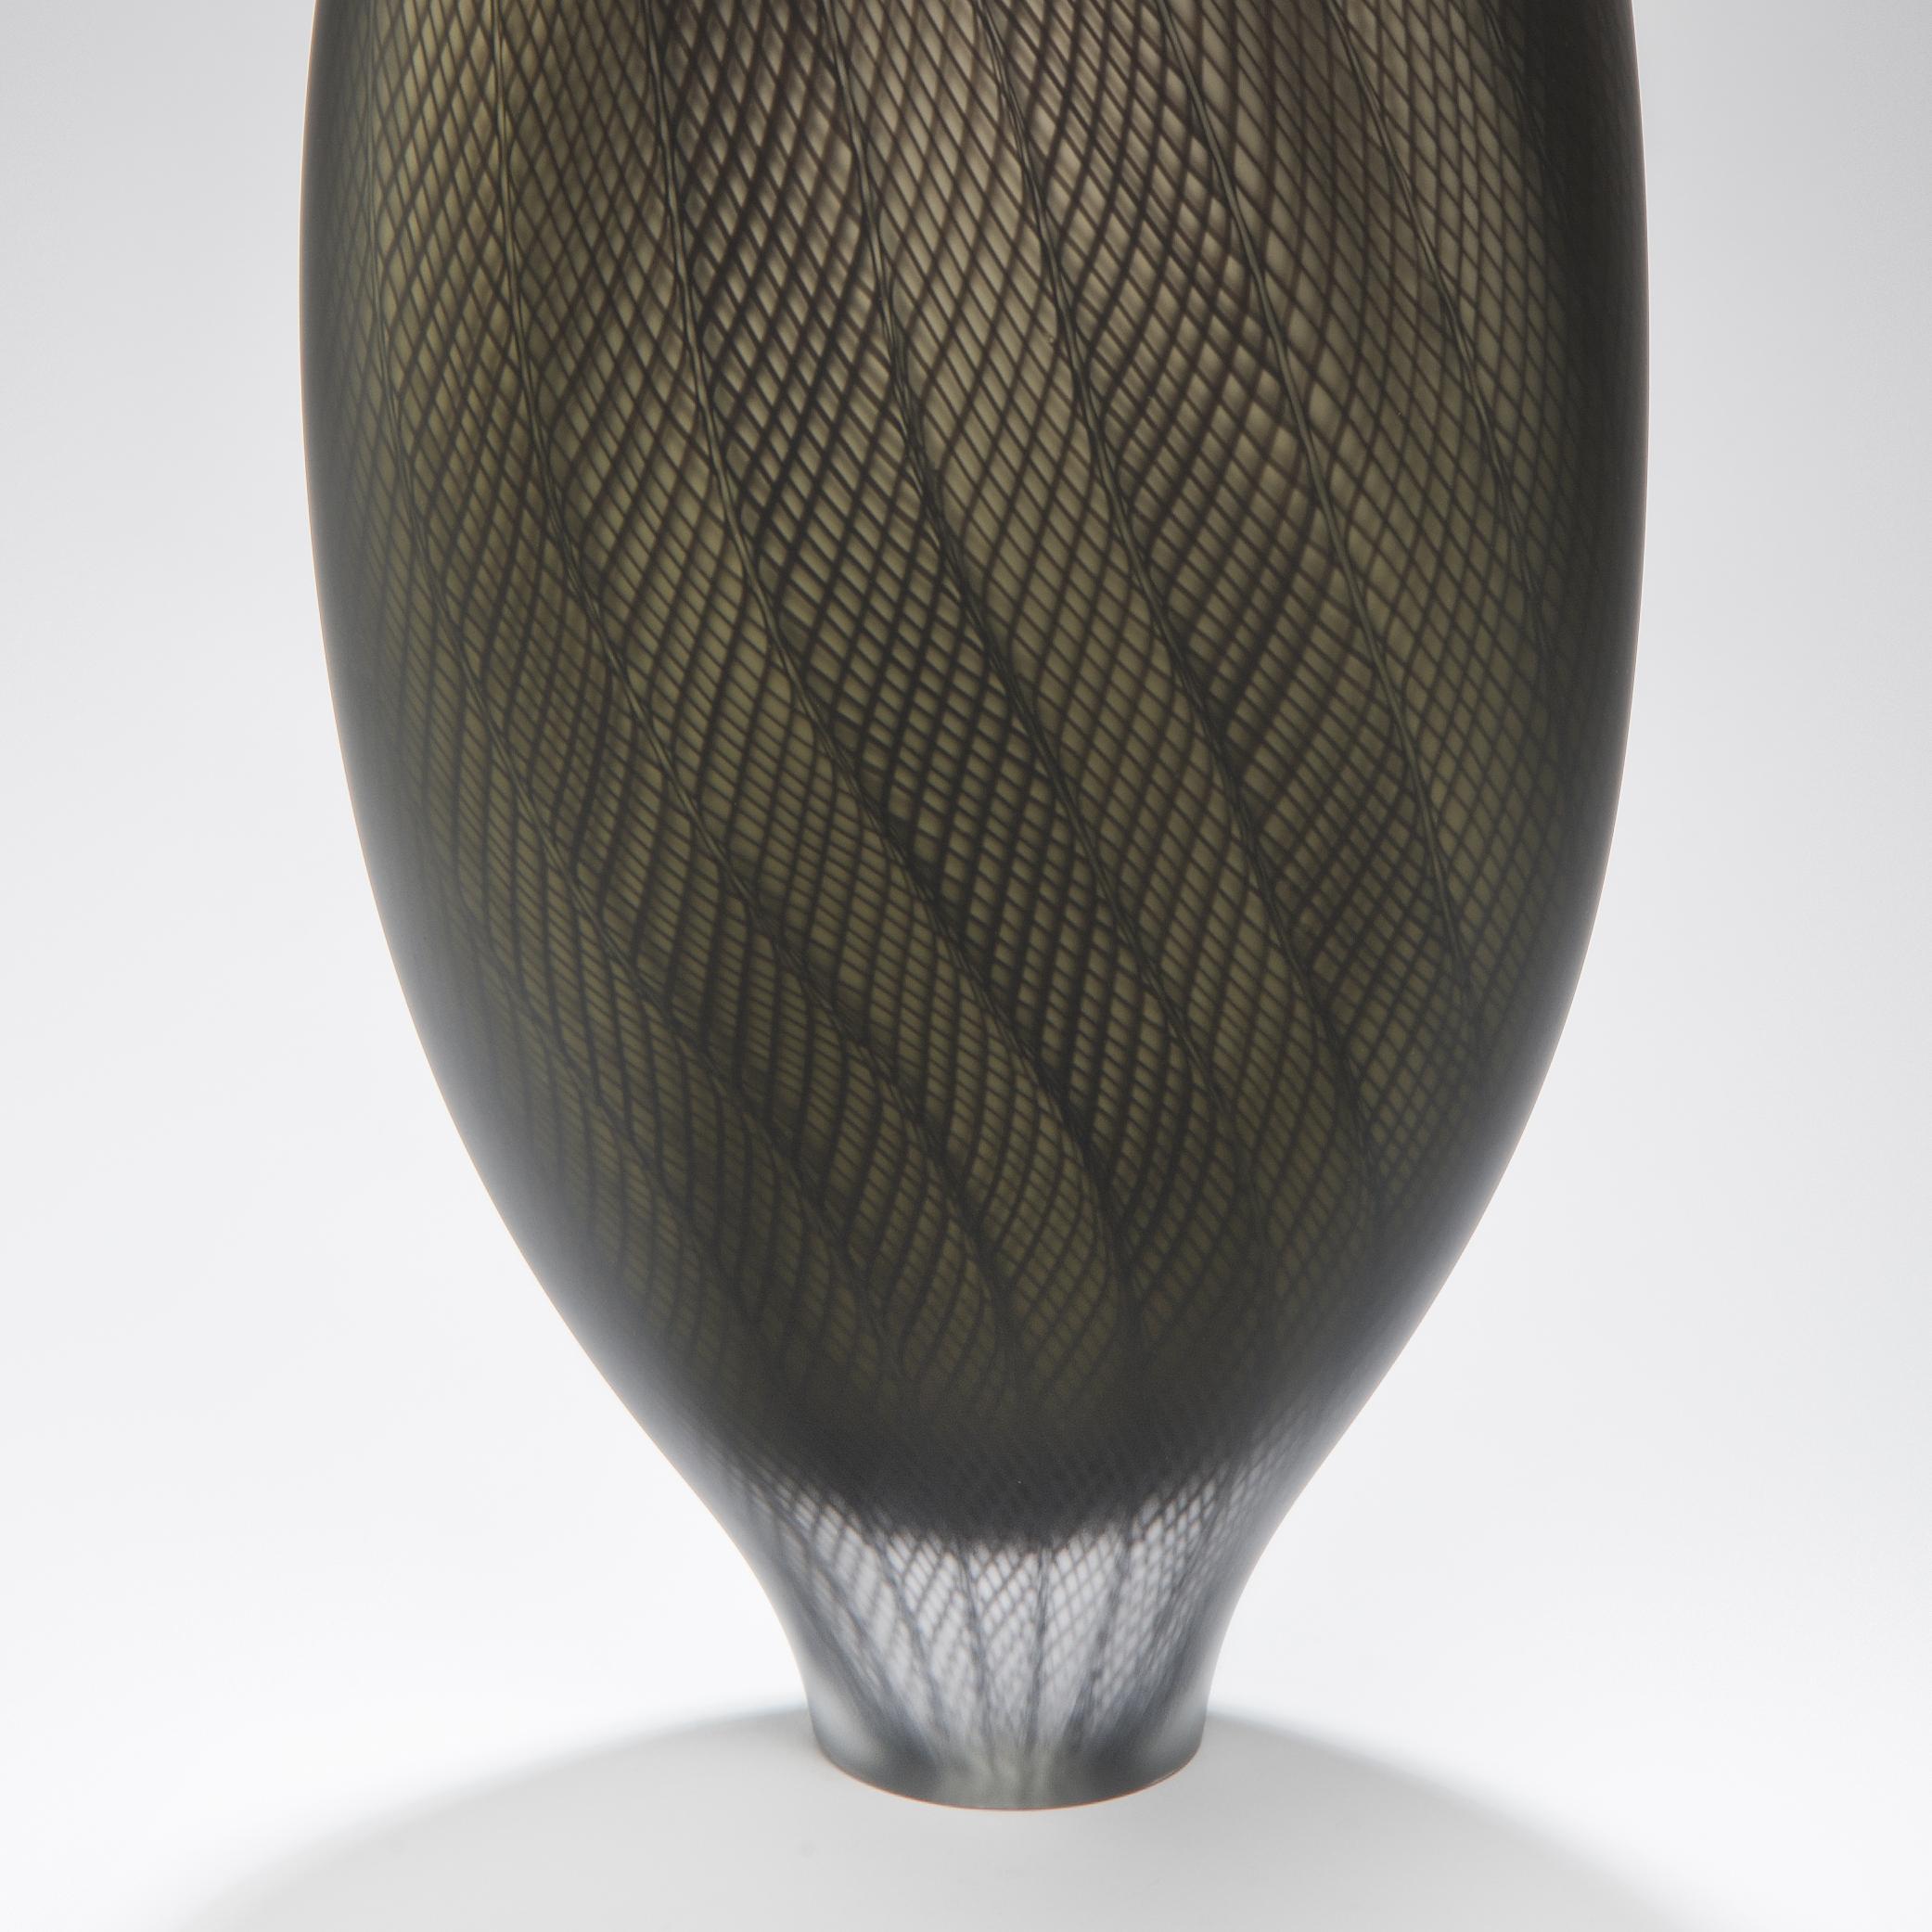 British Stratiform Aes Zanfirico 001, a Unique Bronze Glass Sculpture by Liam Reeves